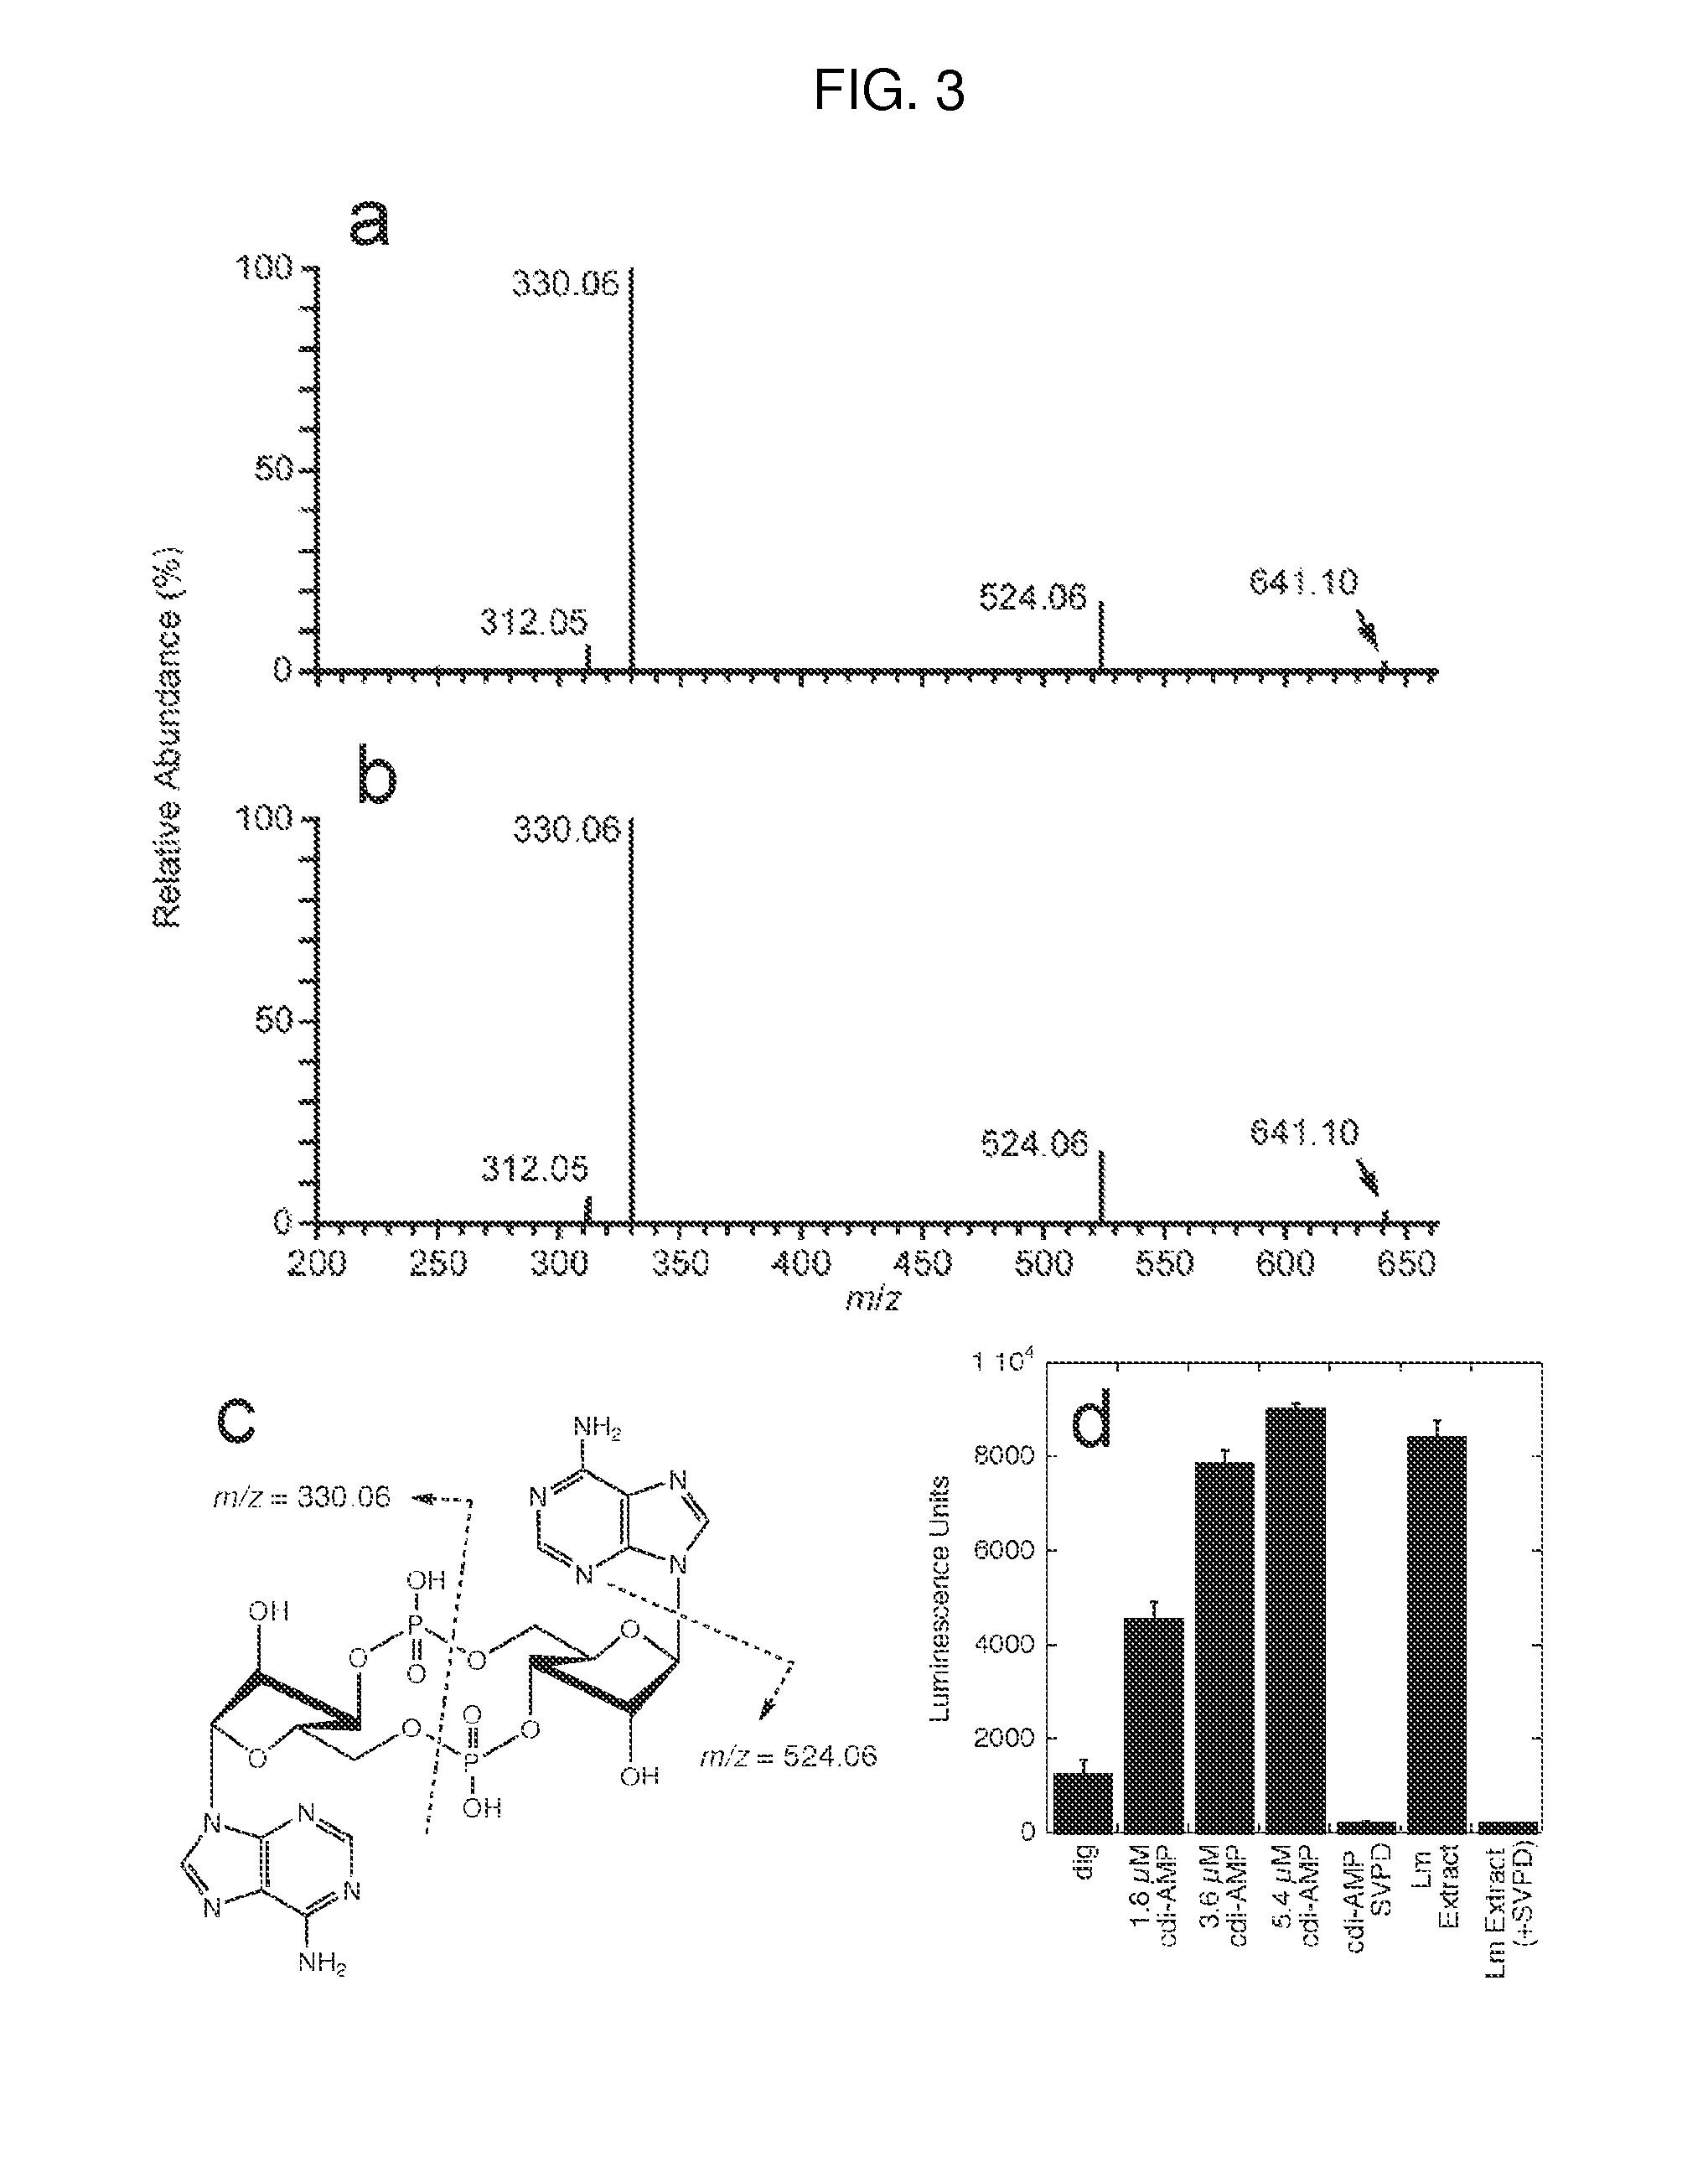 Cyclic di-AMP induction of type I interferon